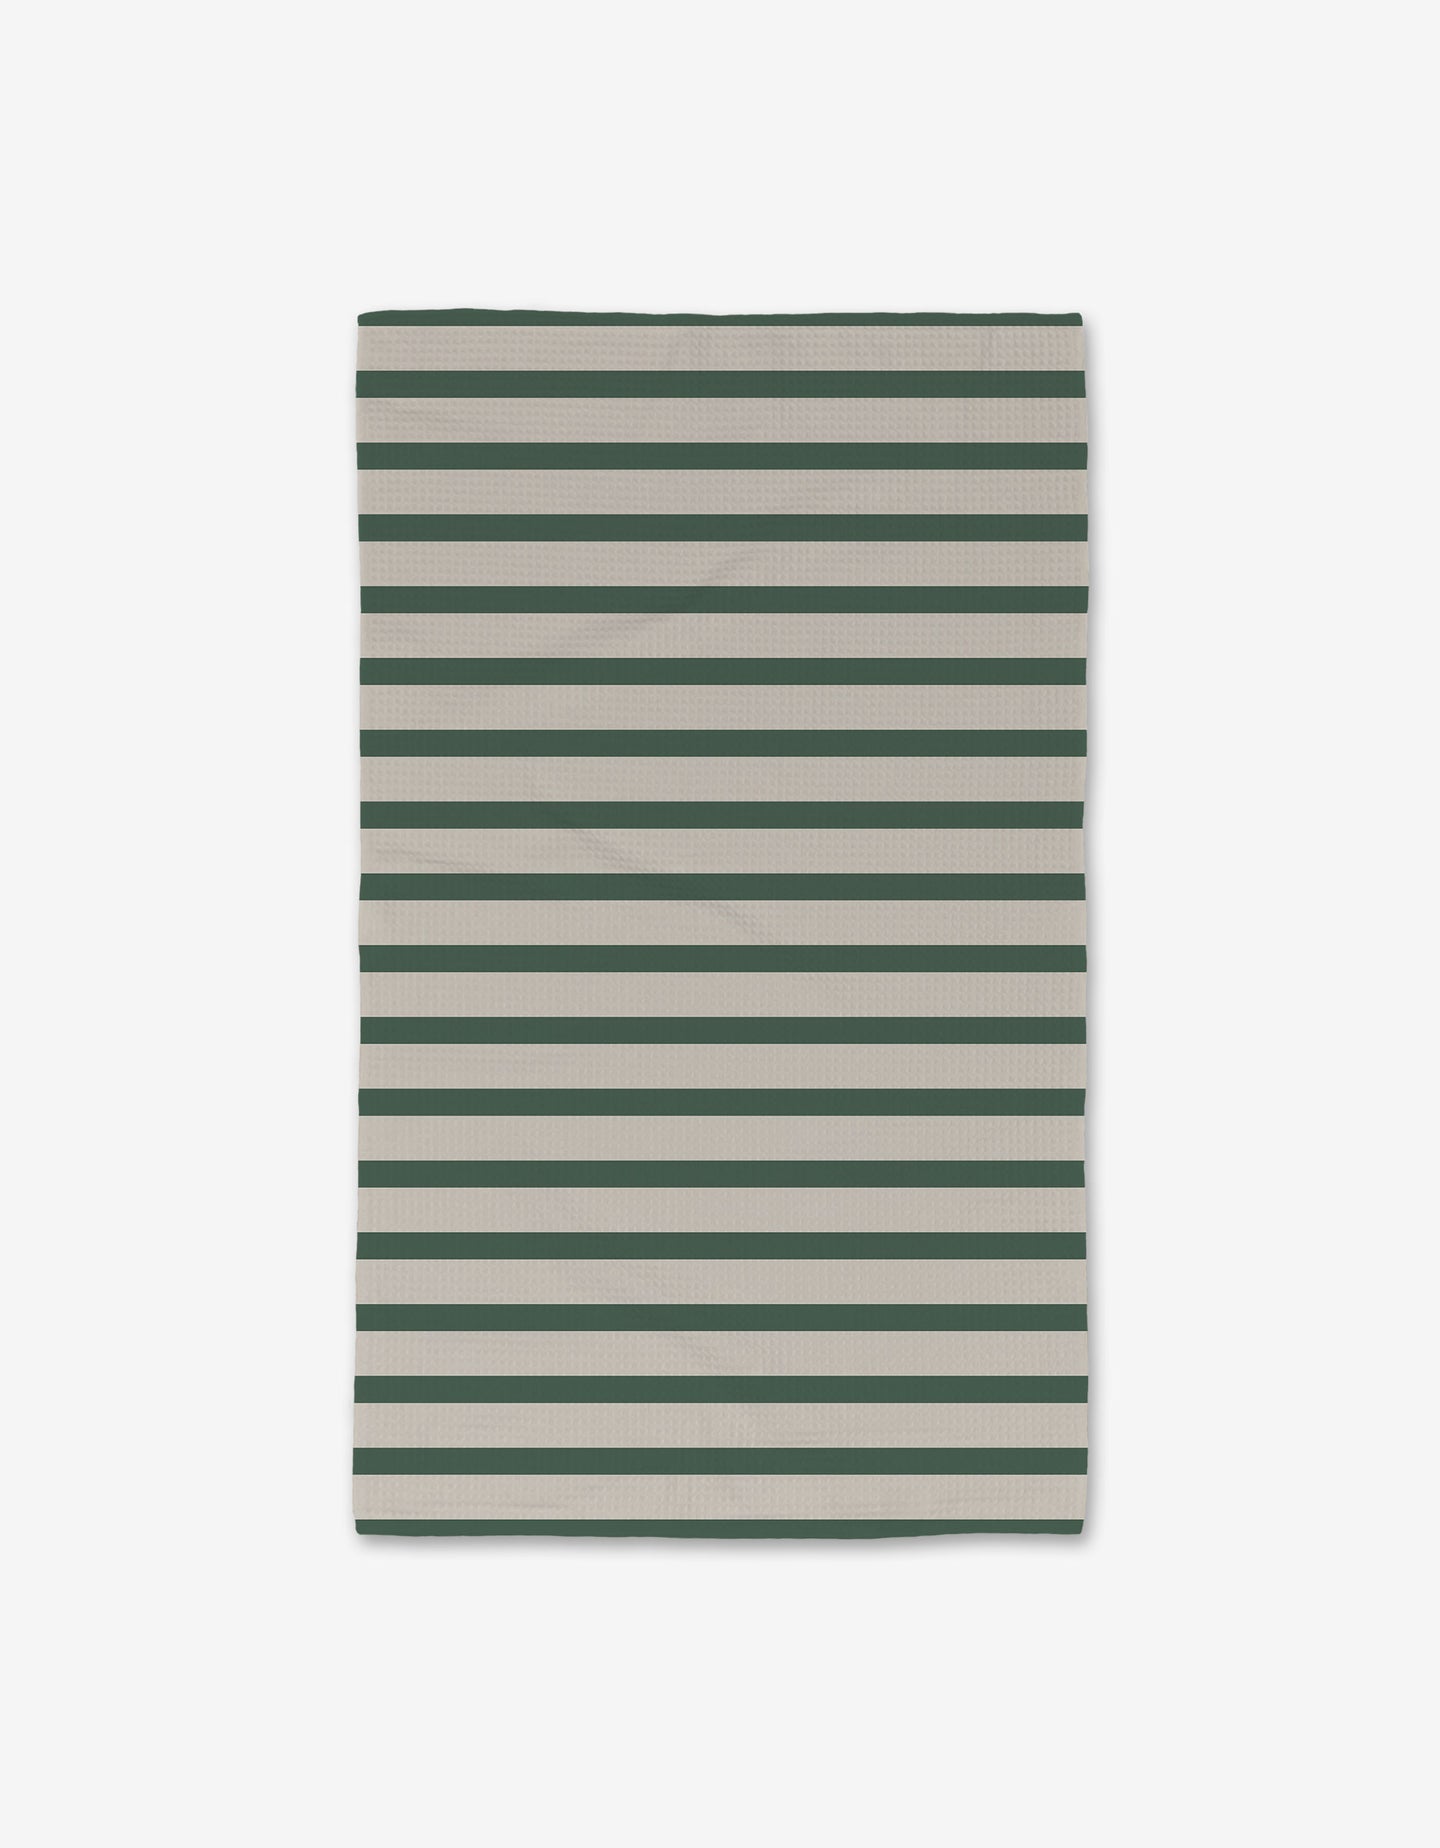 Deep Green Stripes